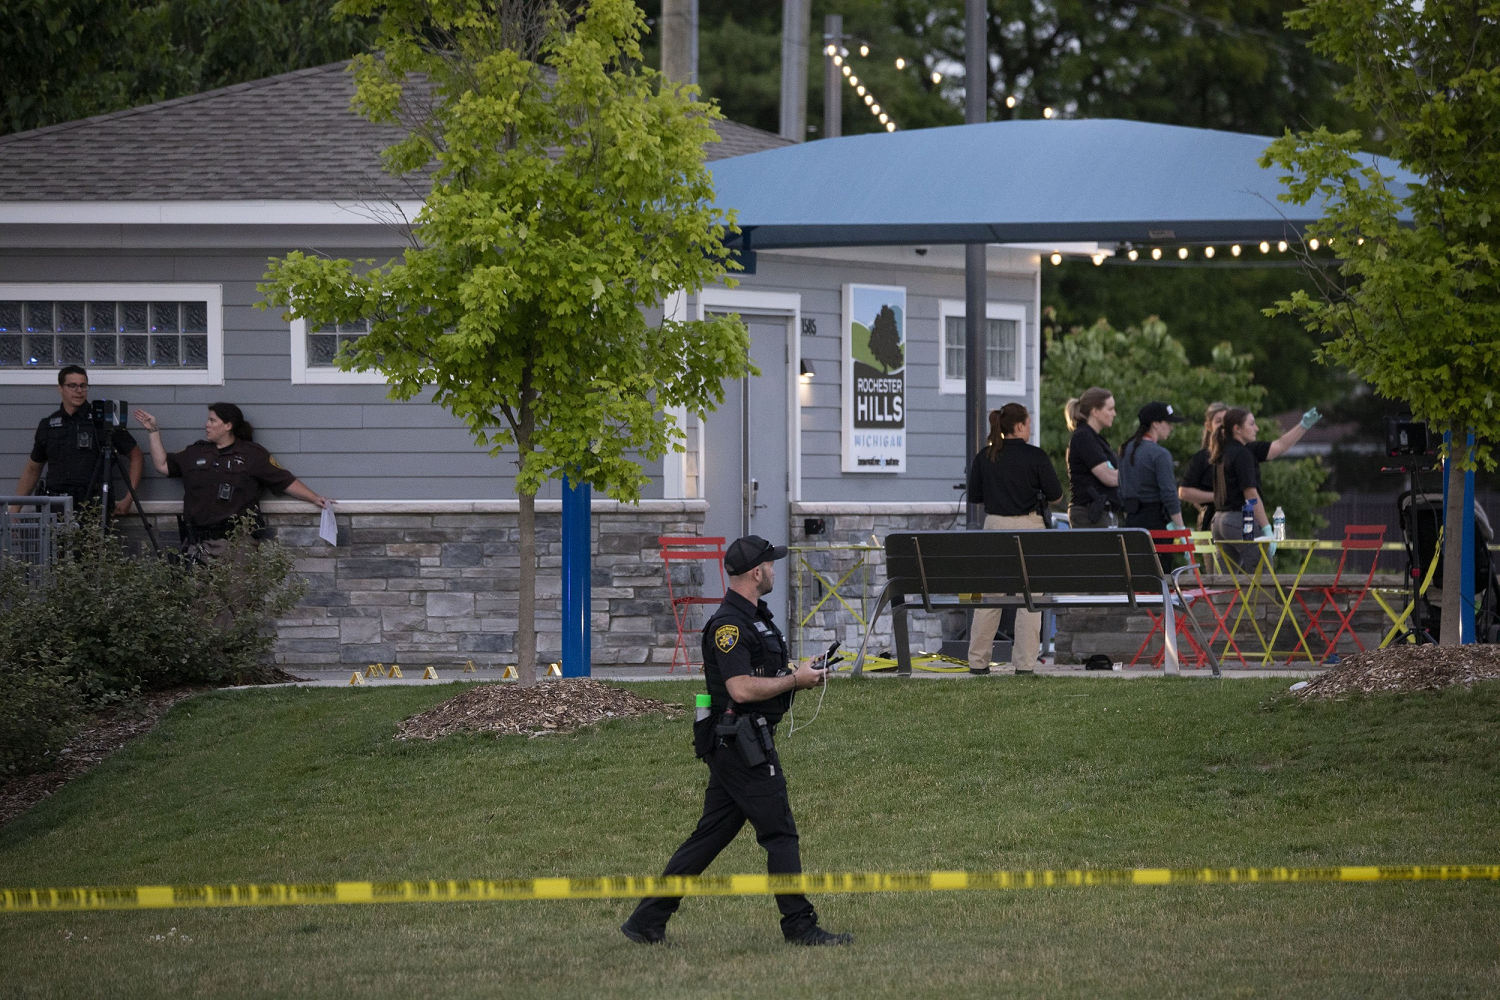 Nine people, including two children, injured in seemingly random shooting at Michigan splash pad